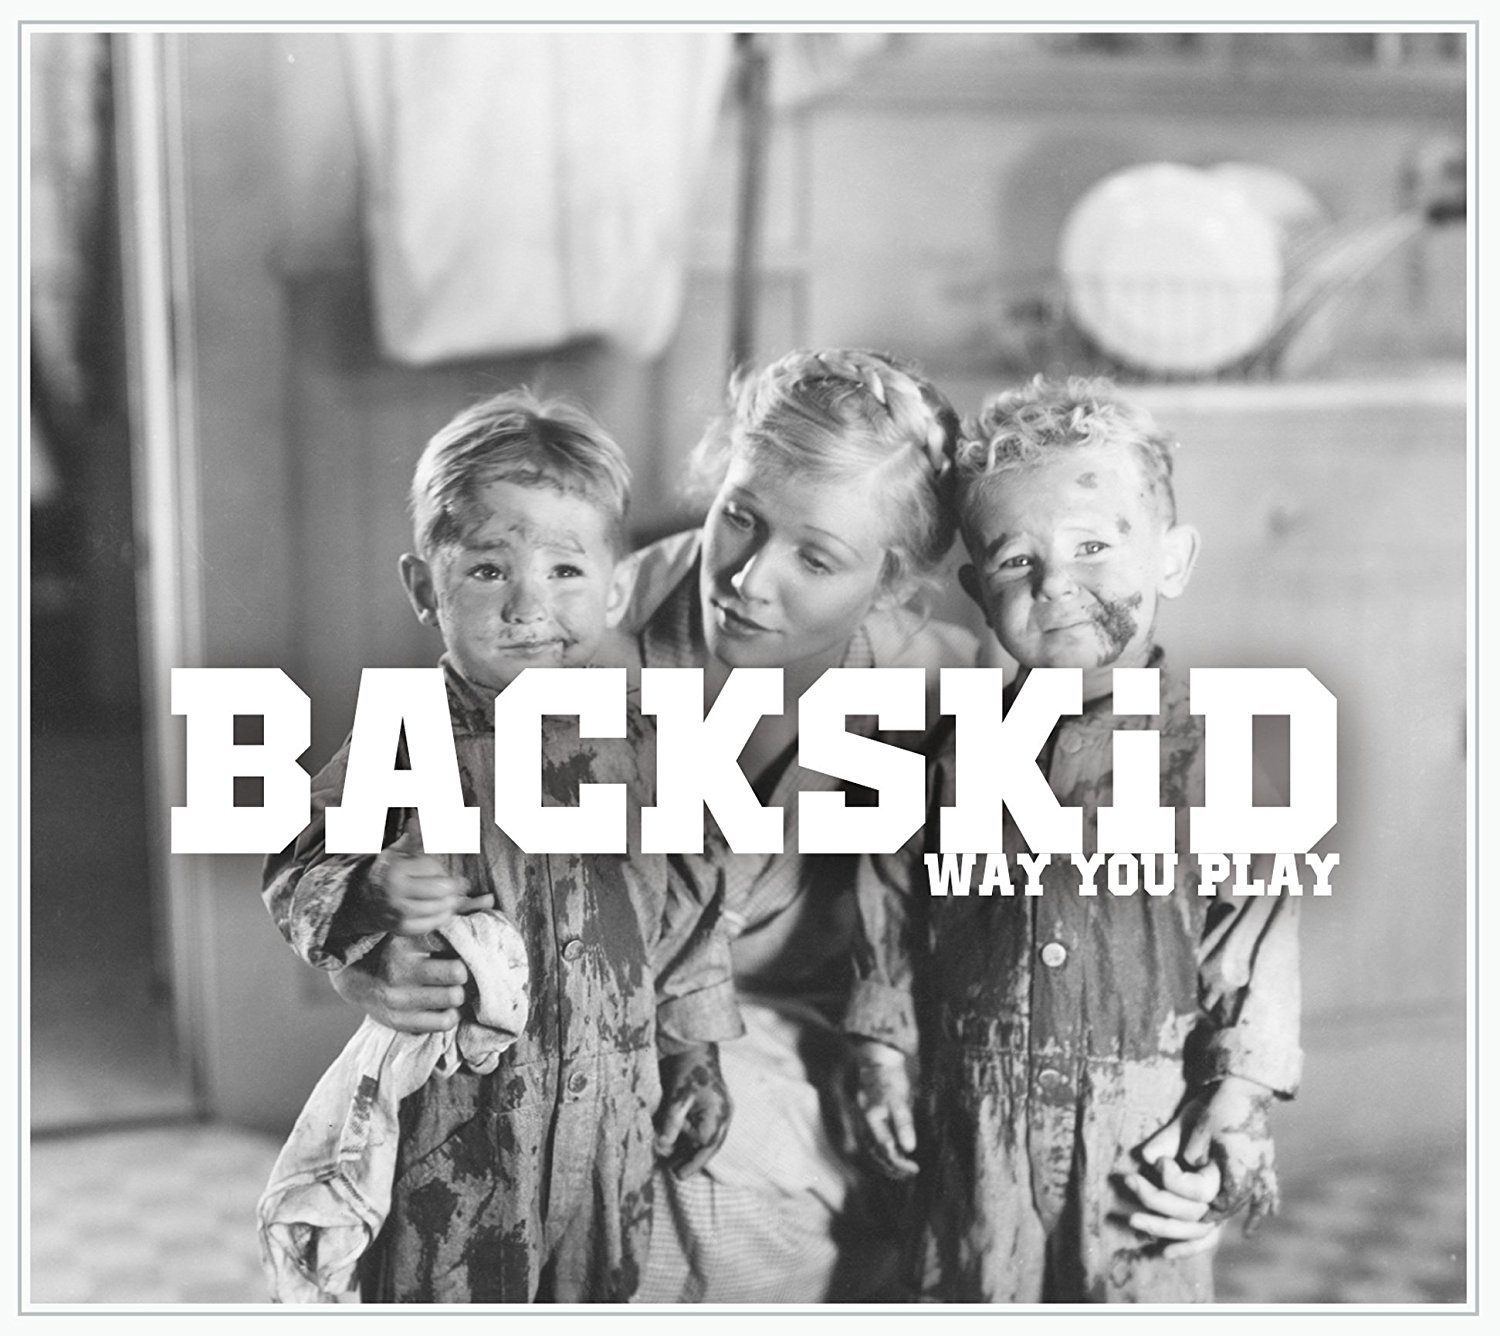 BACKSKiD / WAY YOU PLAY